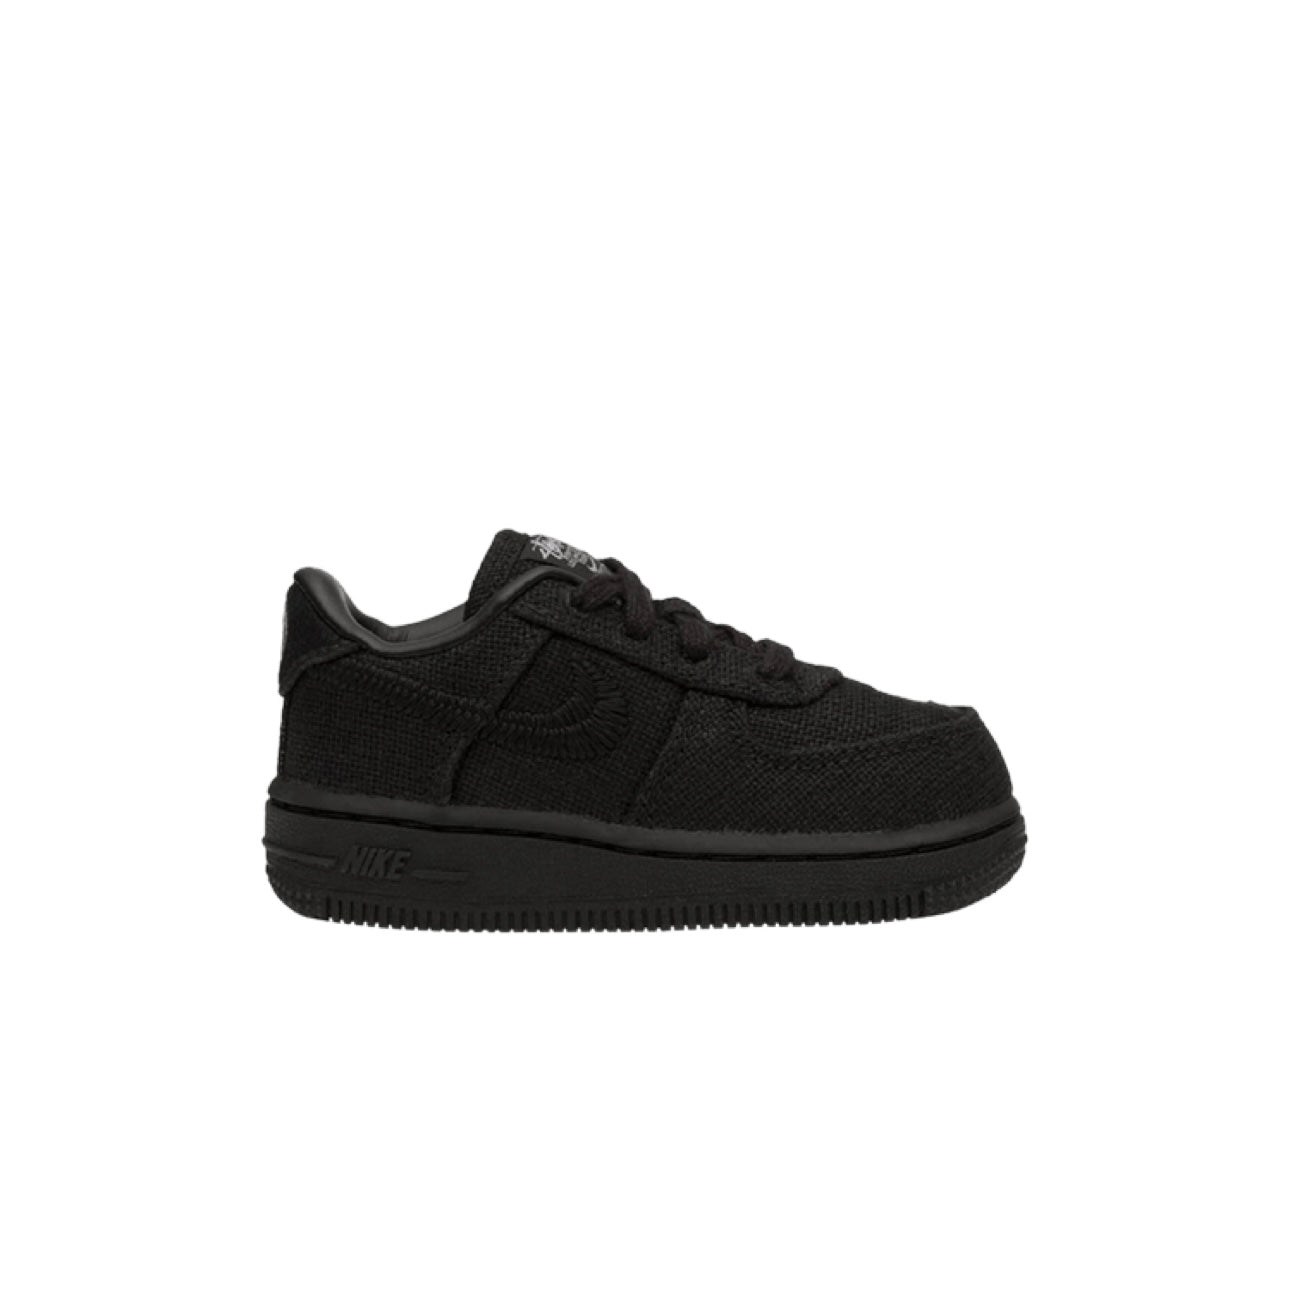 Nike Air Force 1 low Triple Black Kids Shoes Size 12C 